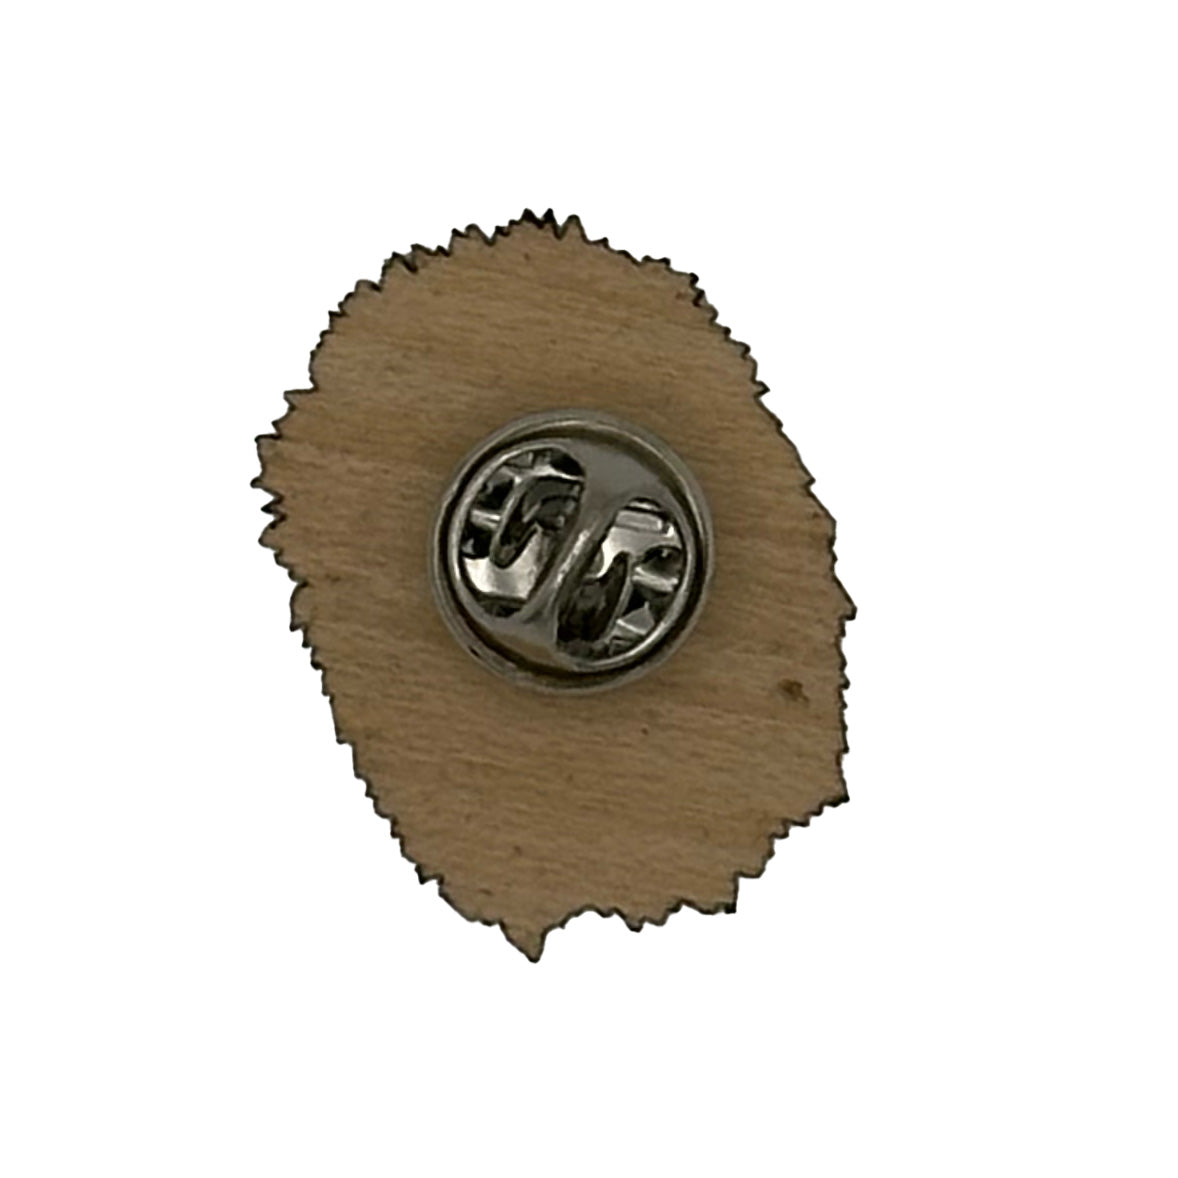 hedgehog wooden pin badge showing reverse